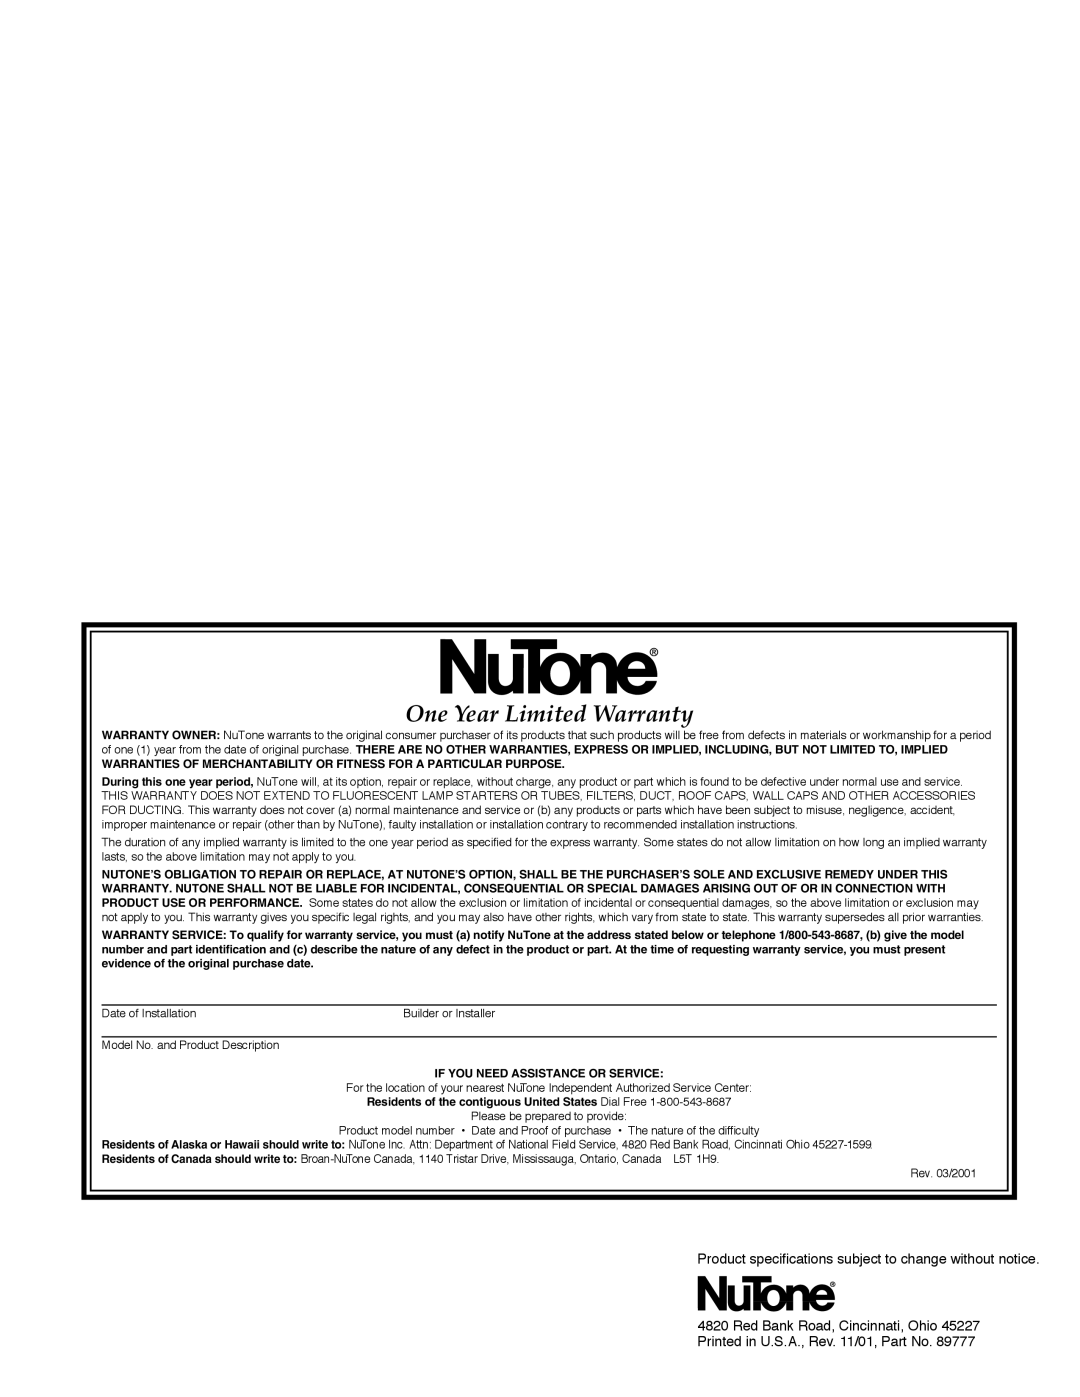 NuTone CFS-2WH installation instructions One Year Limited Warranty, Red Bank Road, Cincinnati, Ohio 